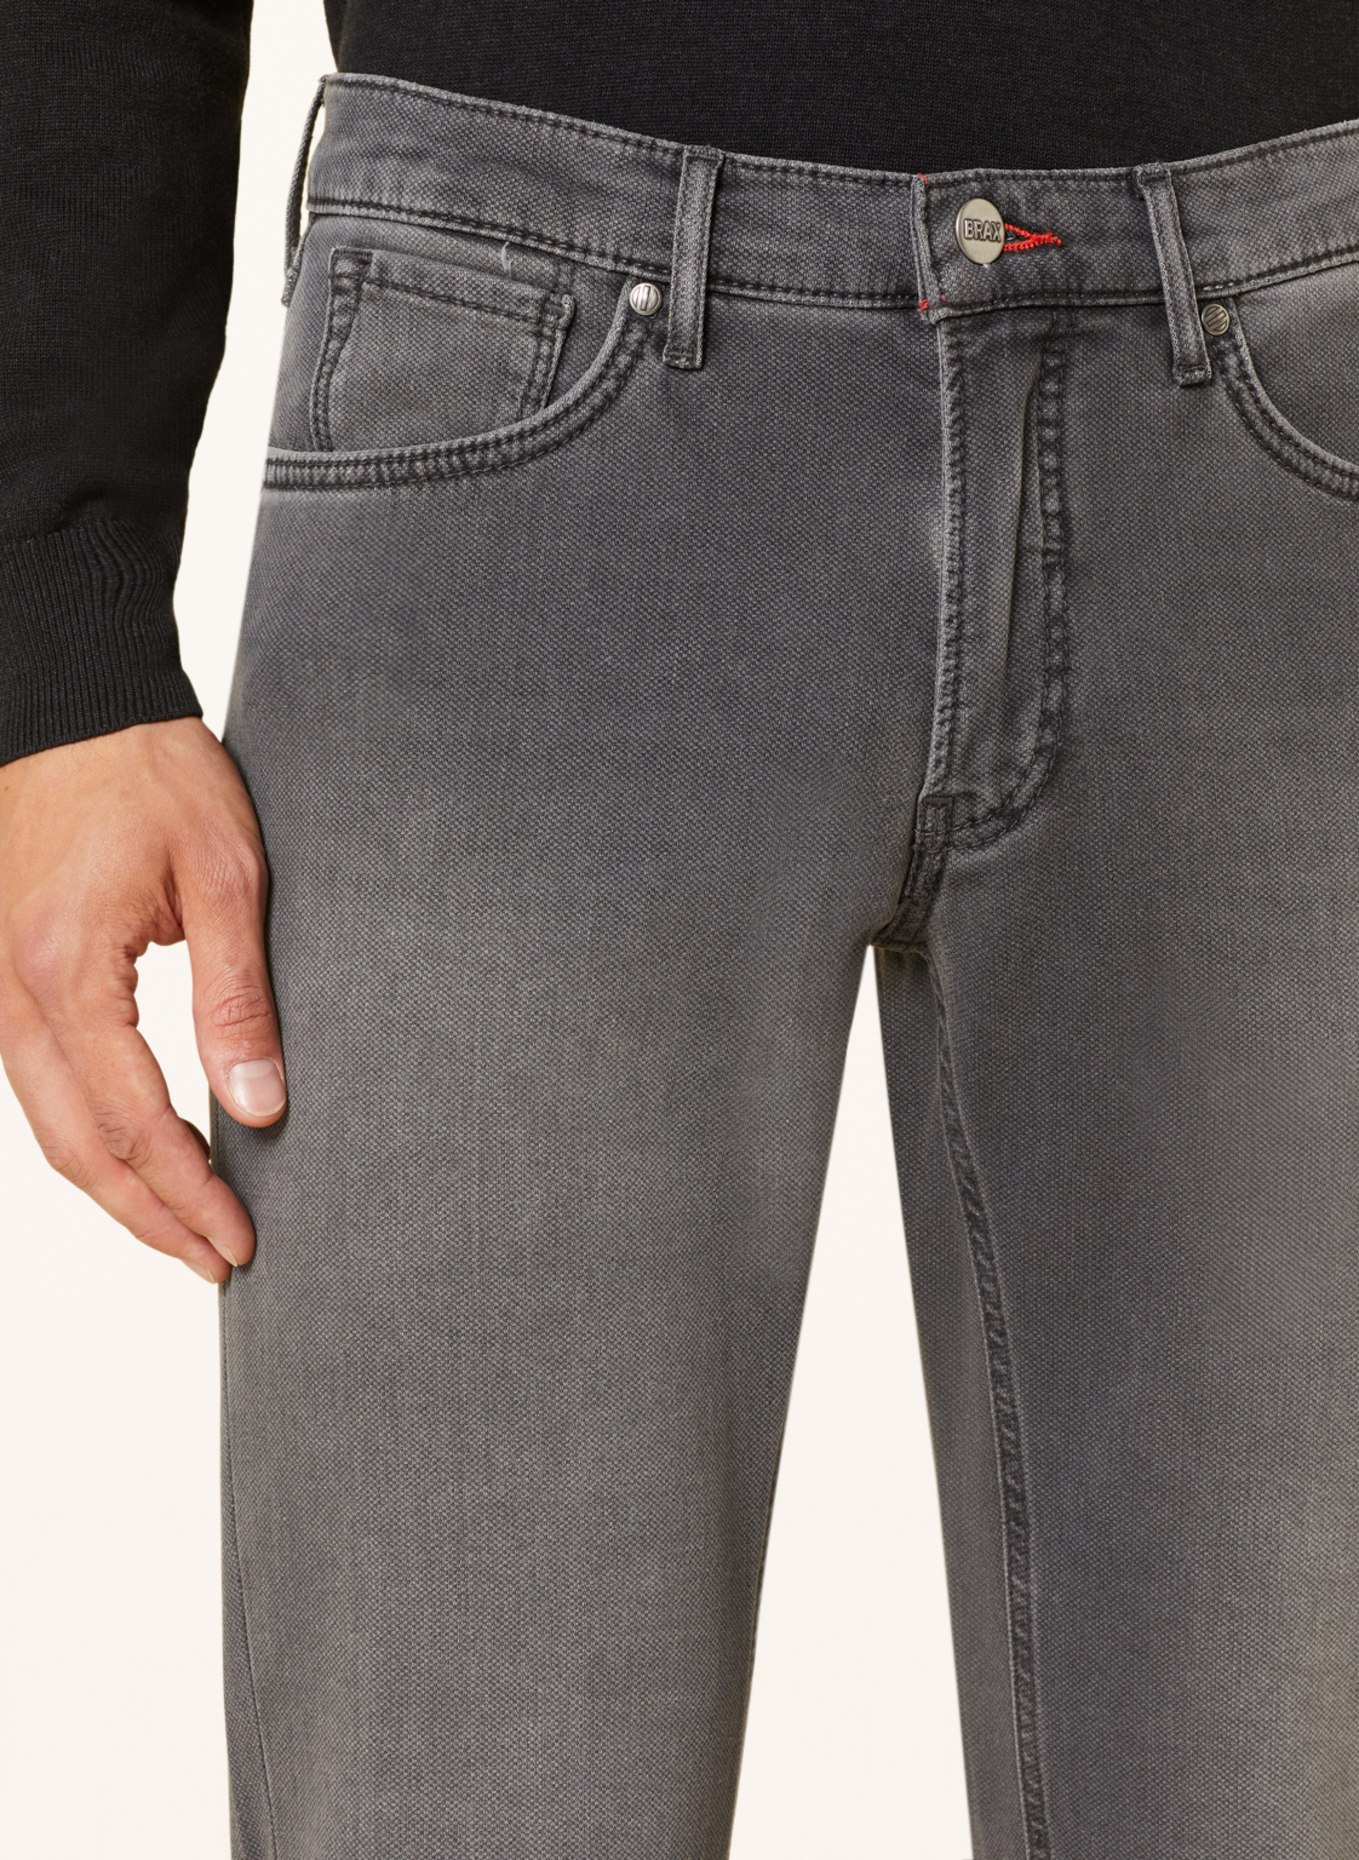 Modern grey Jeans 05 in CHUCK Fit BRAX used slate